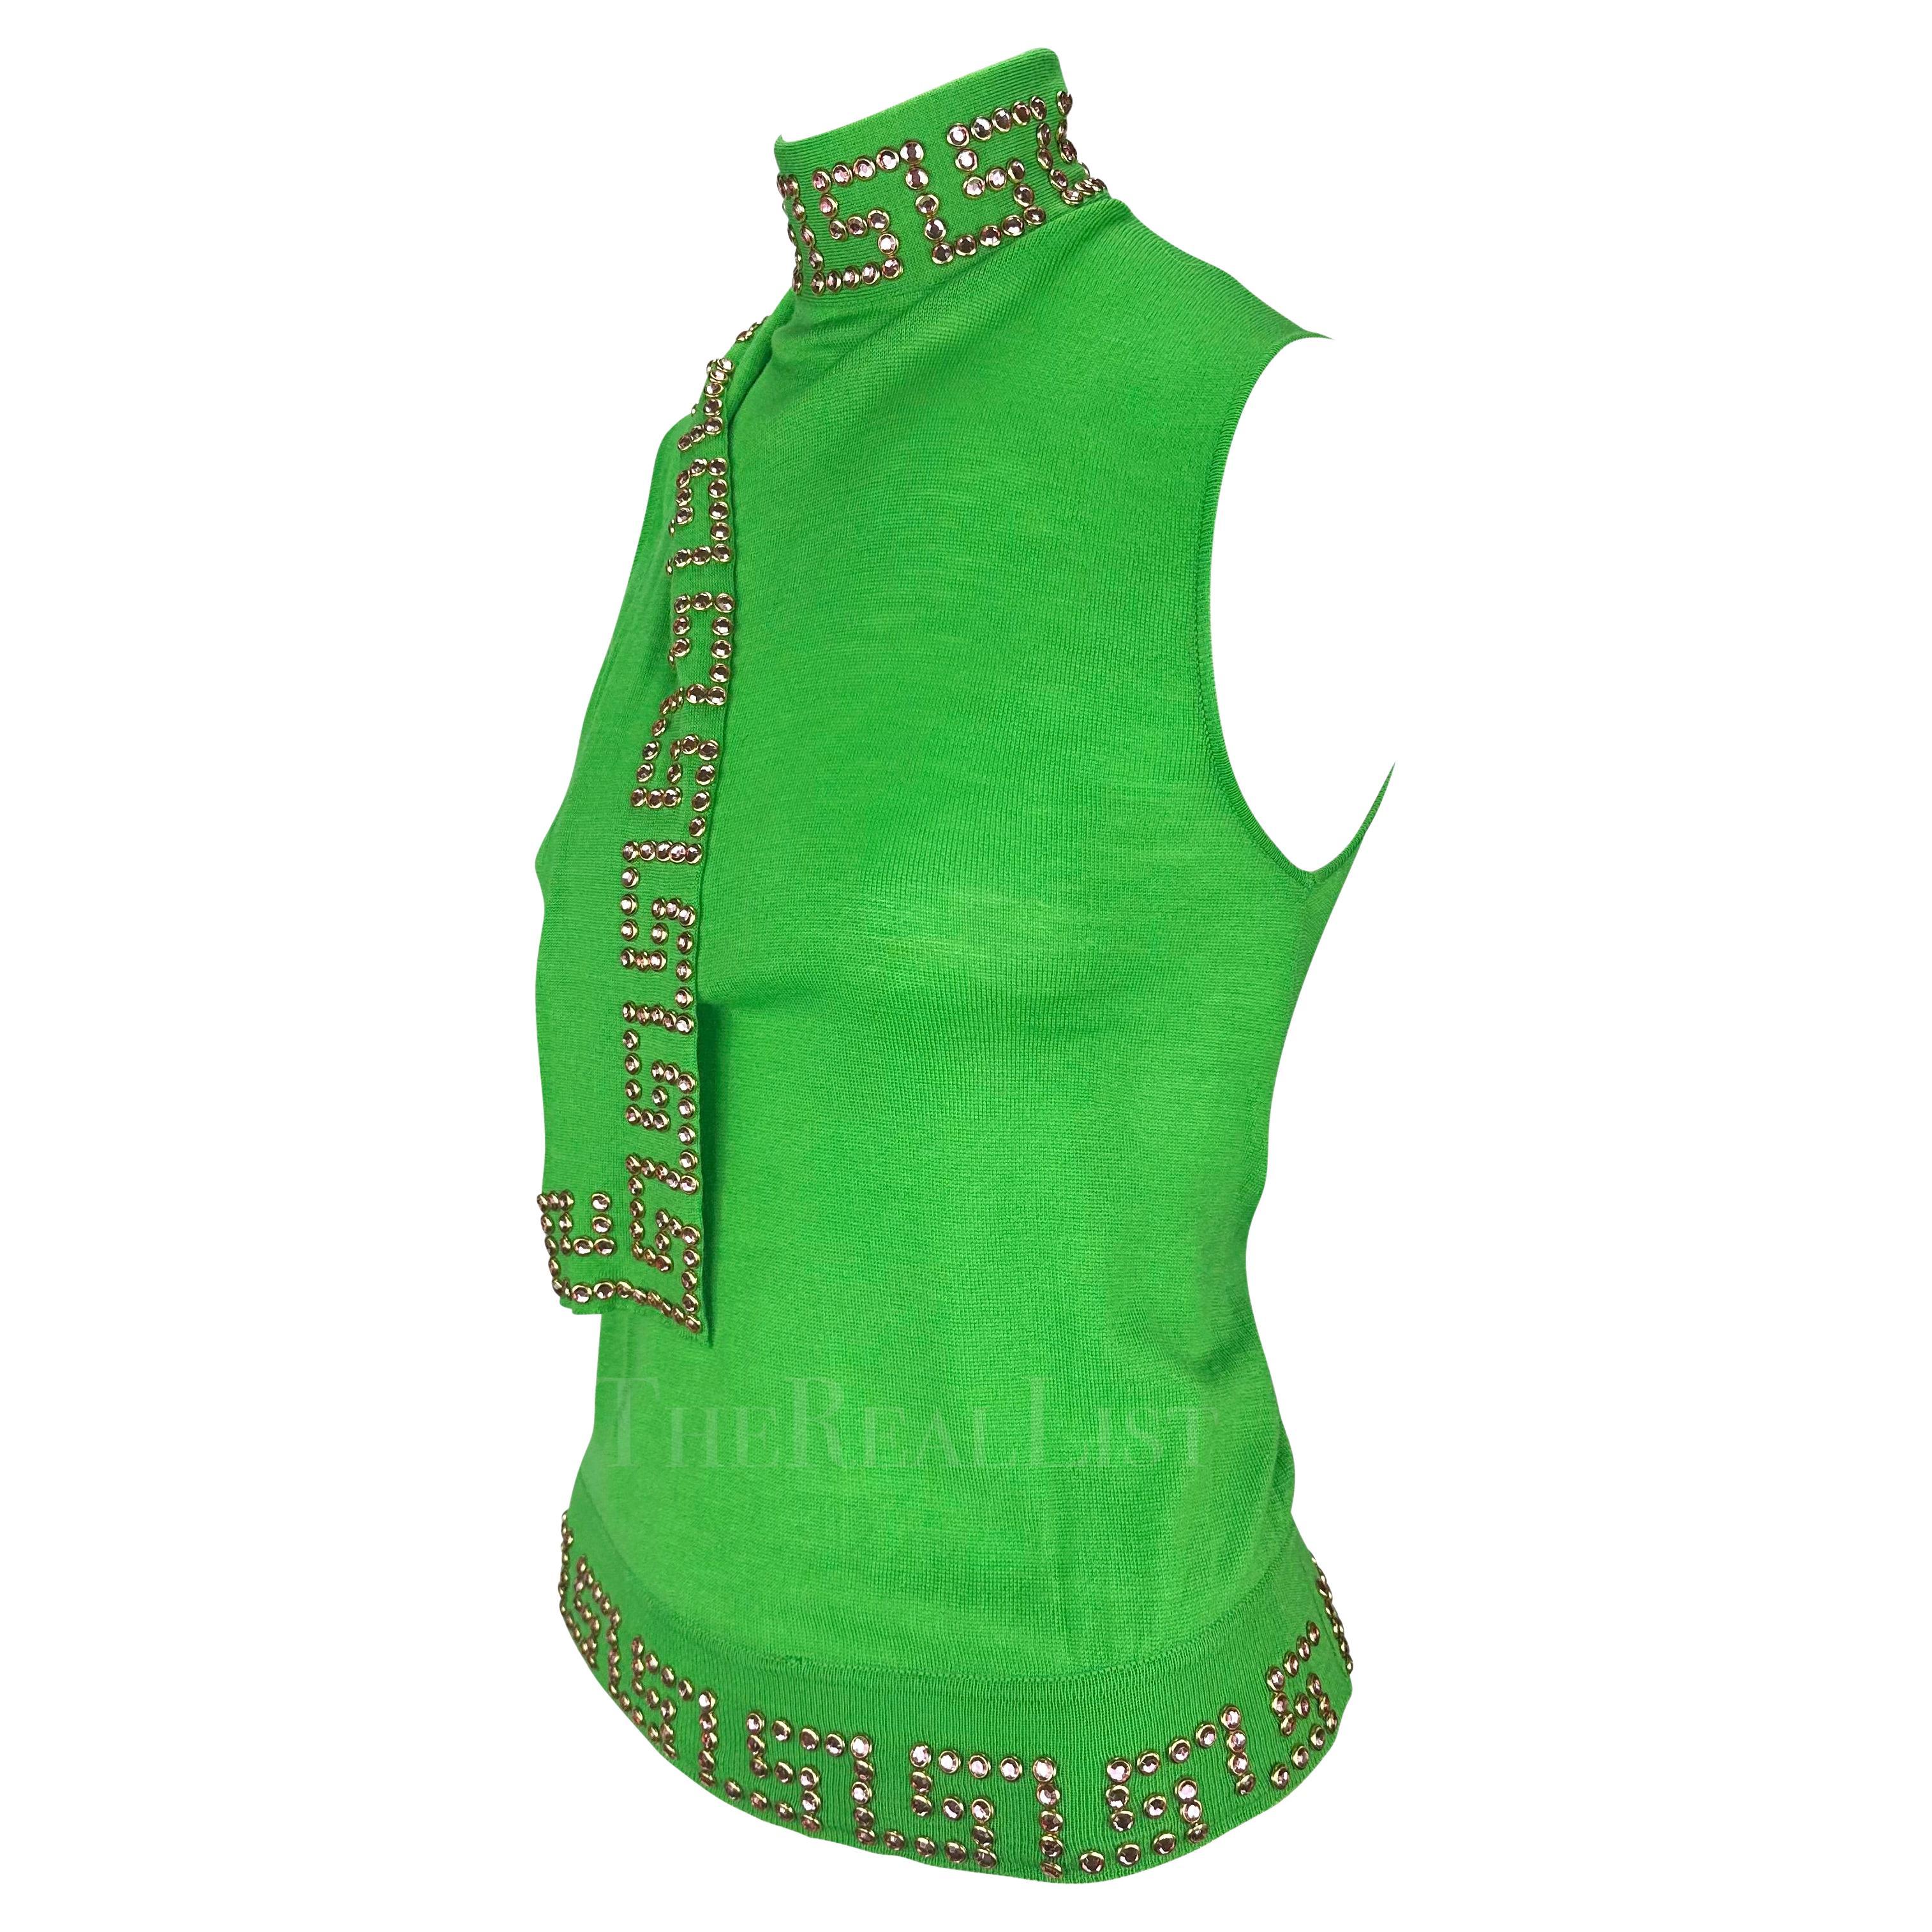 S/S 2000 Gianni Versace by Donatella Runway Green Rhinestone Greek Key Knit Top For Sale 1